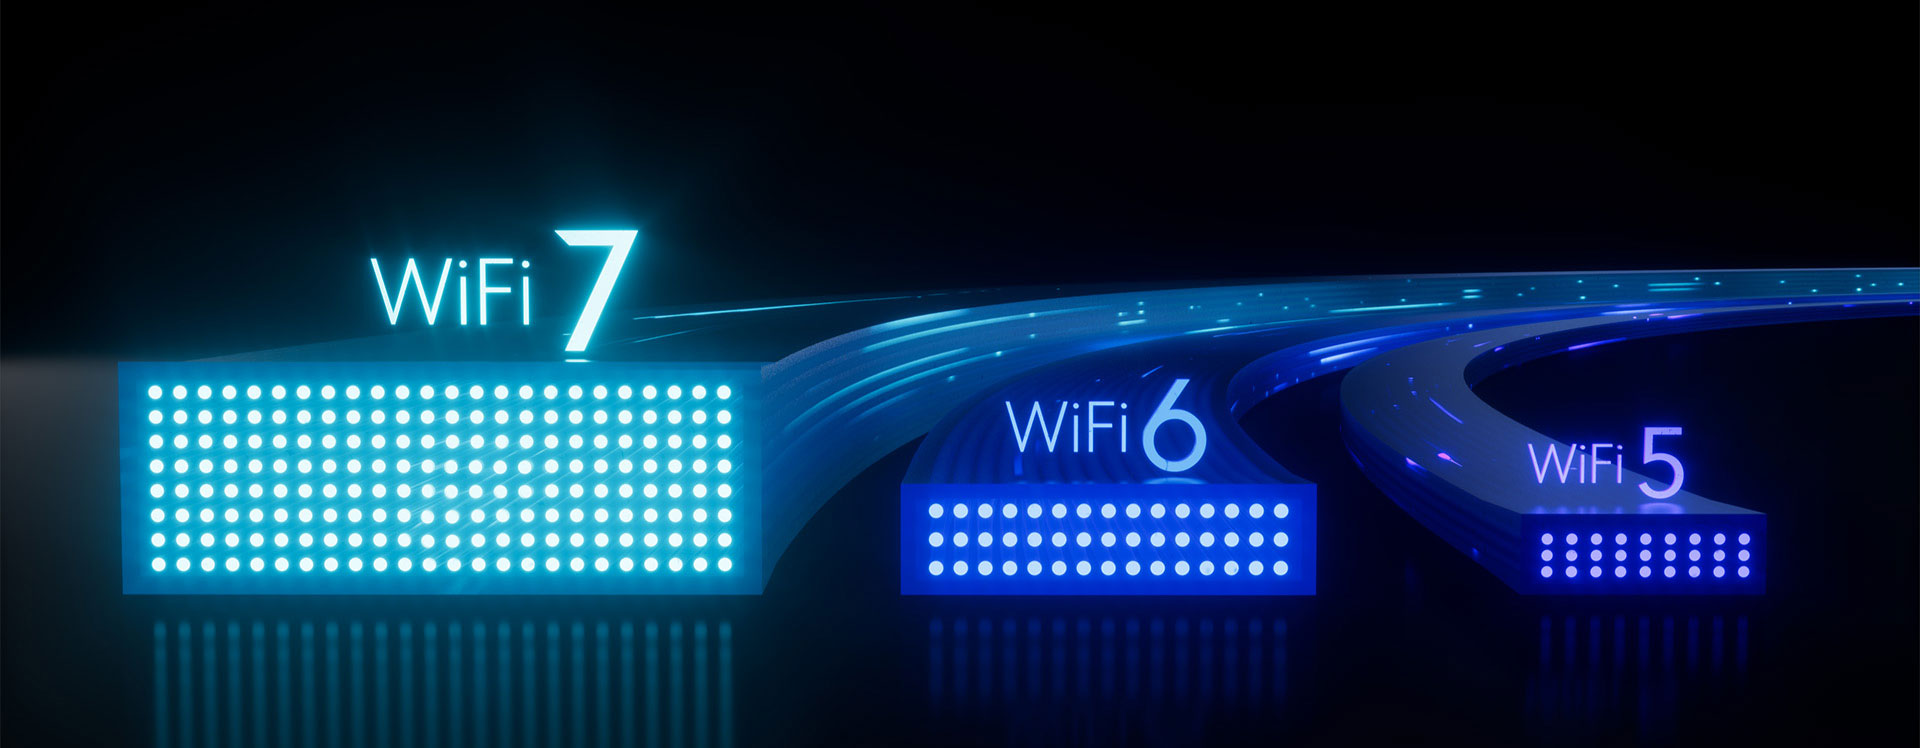 Wireless network 7